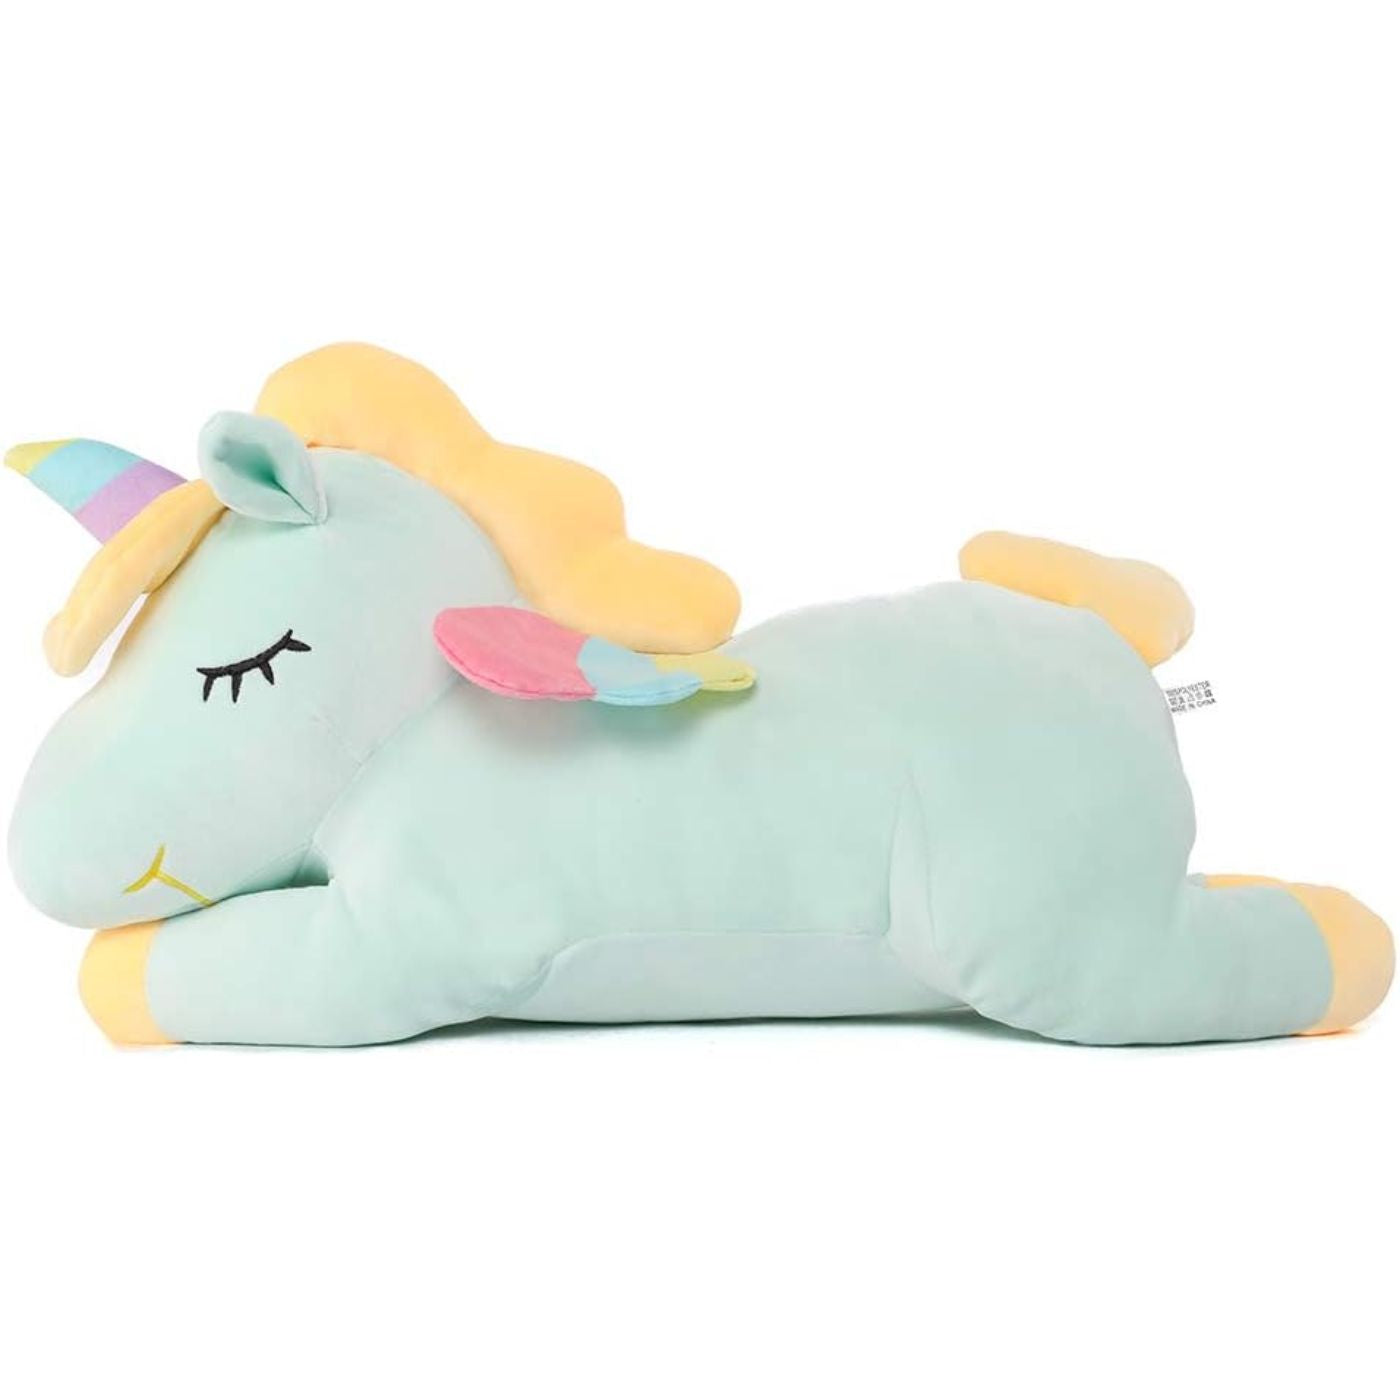 Unicorn Stuffed Toy, Green, 23.6 Inches